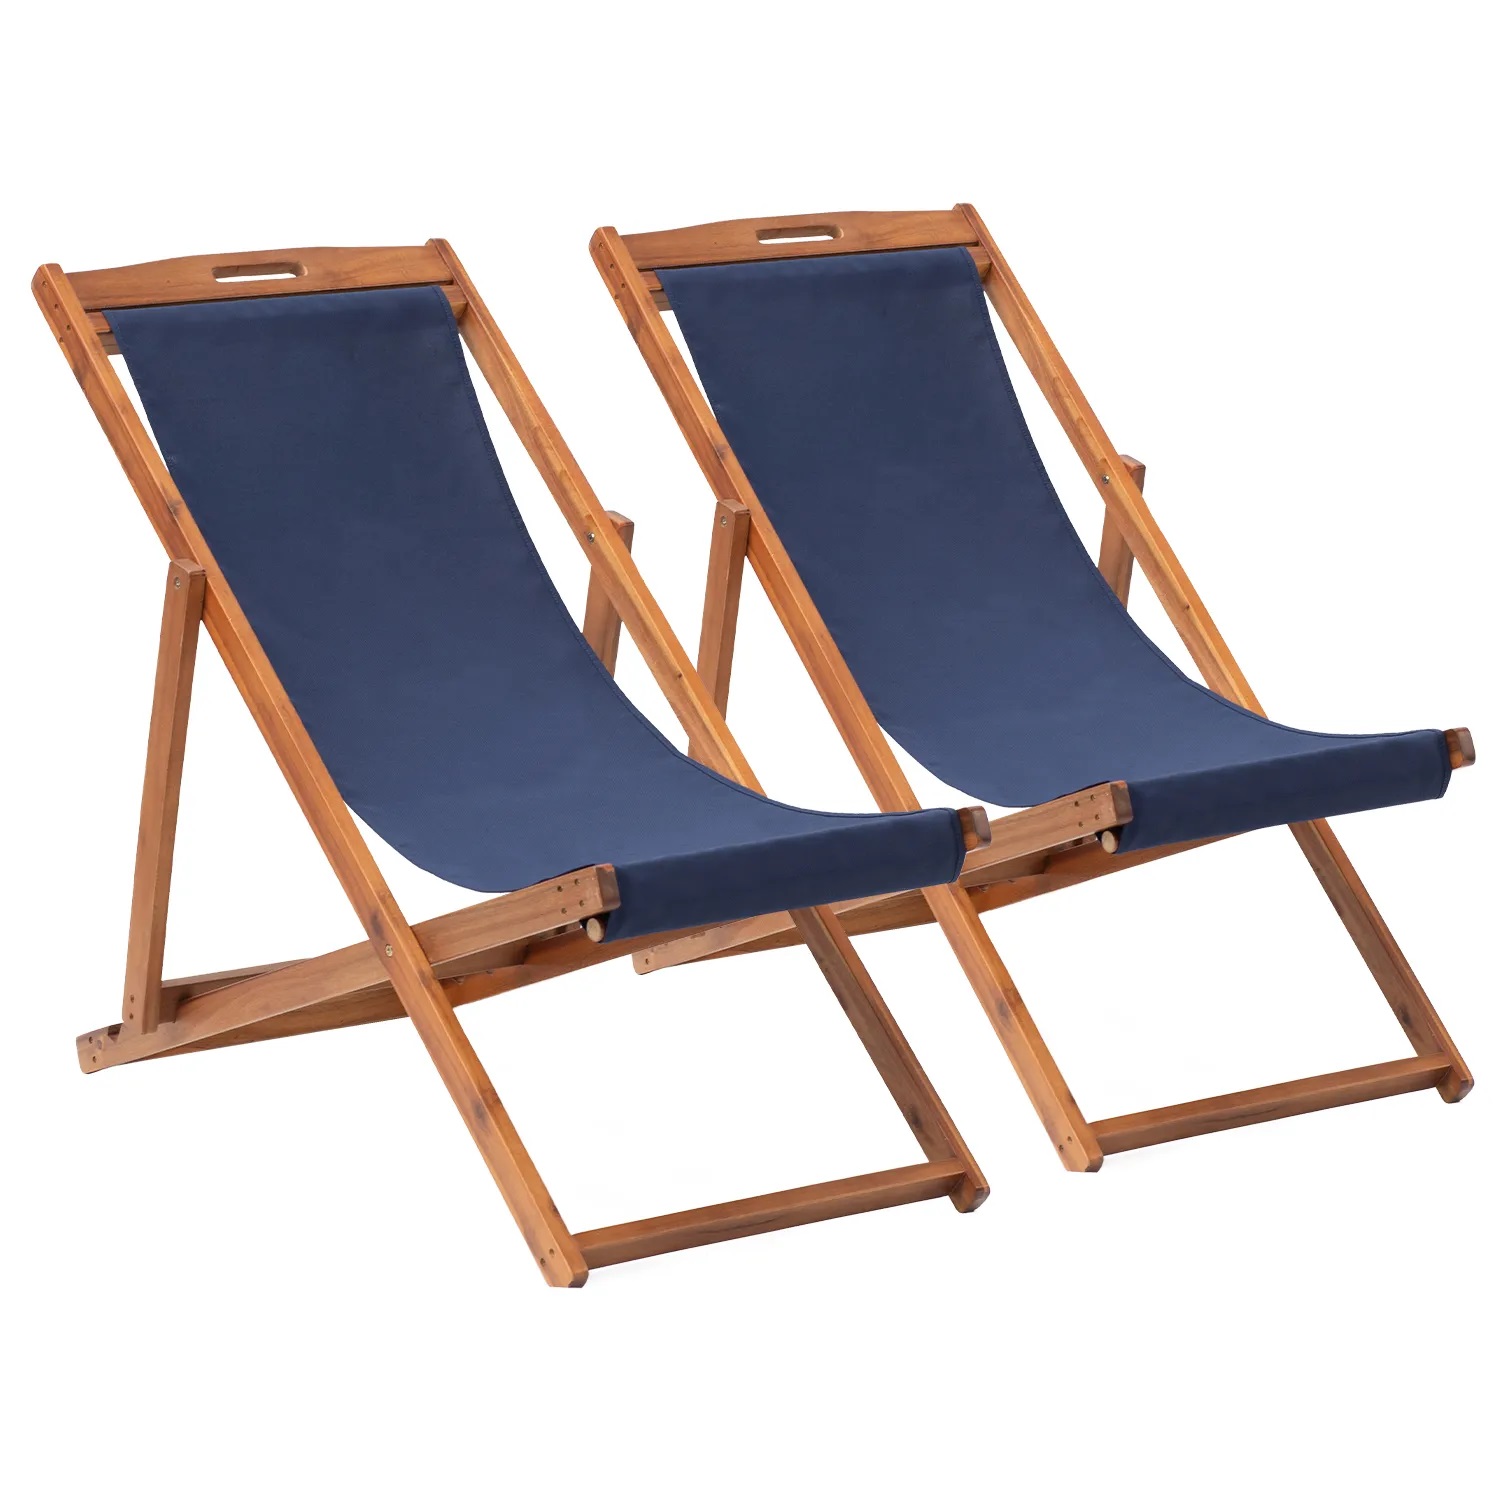 YRLLENSDAN Beach Chair, Patio Lounge Chair 2 Set Beach Recliner Chair Set Outdoor Folding Portable Reclining Chairs Adjustable Lounge Chair with Solid Wood Frame(Blue) - image 1 of 7